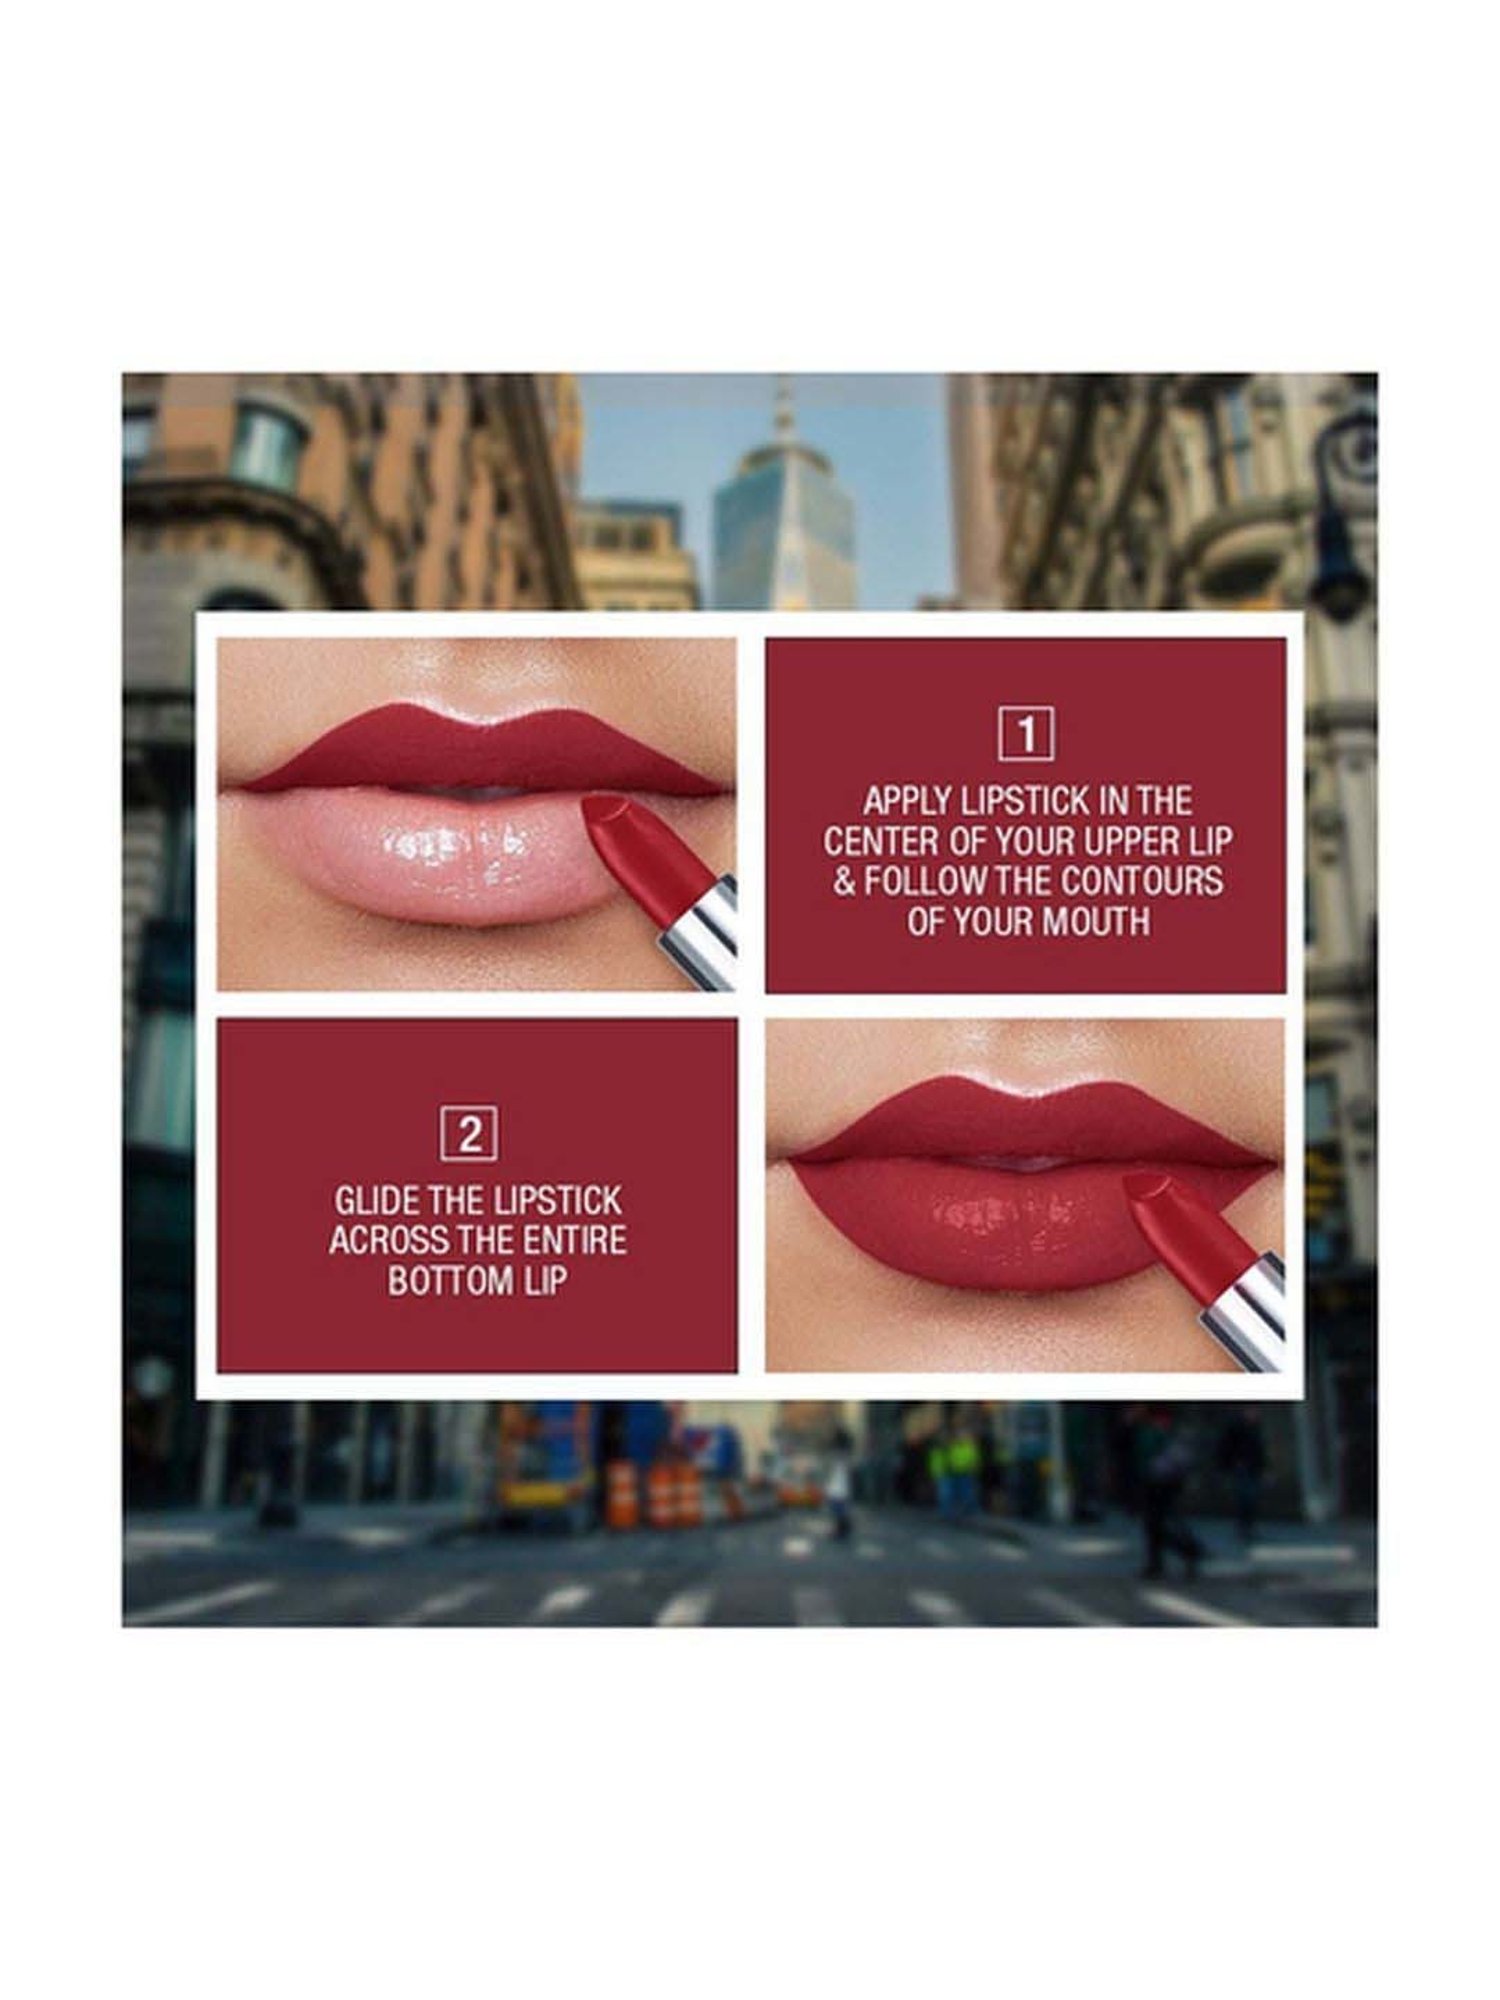 Buy MAYBELLINE Cherry Chic Maybelline New York Color Sensational Powder  Matte Lipstick, Cherry Chic